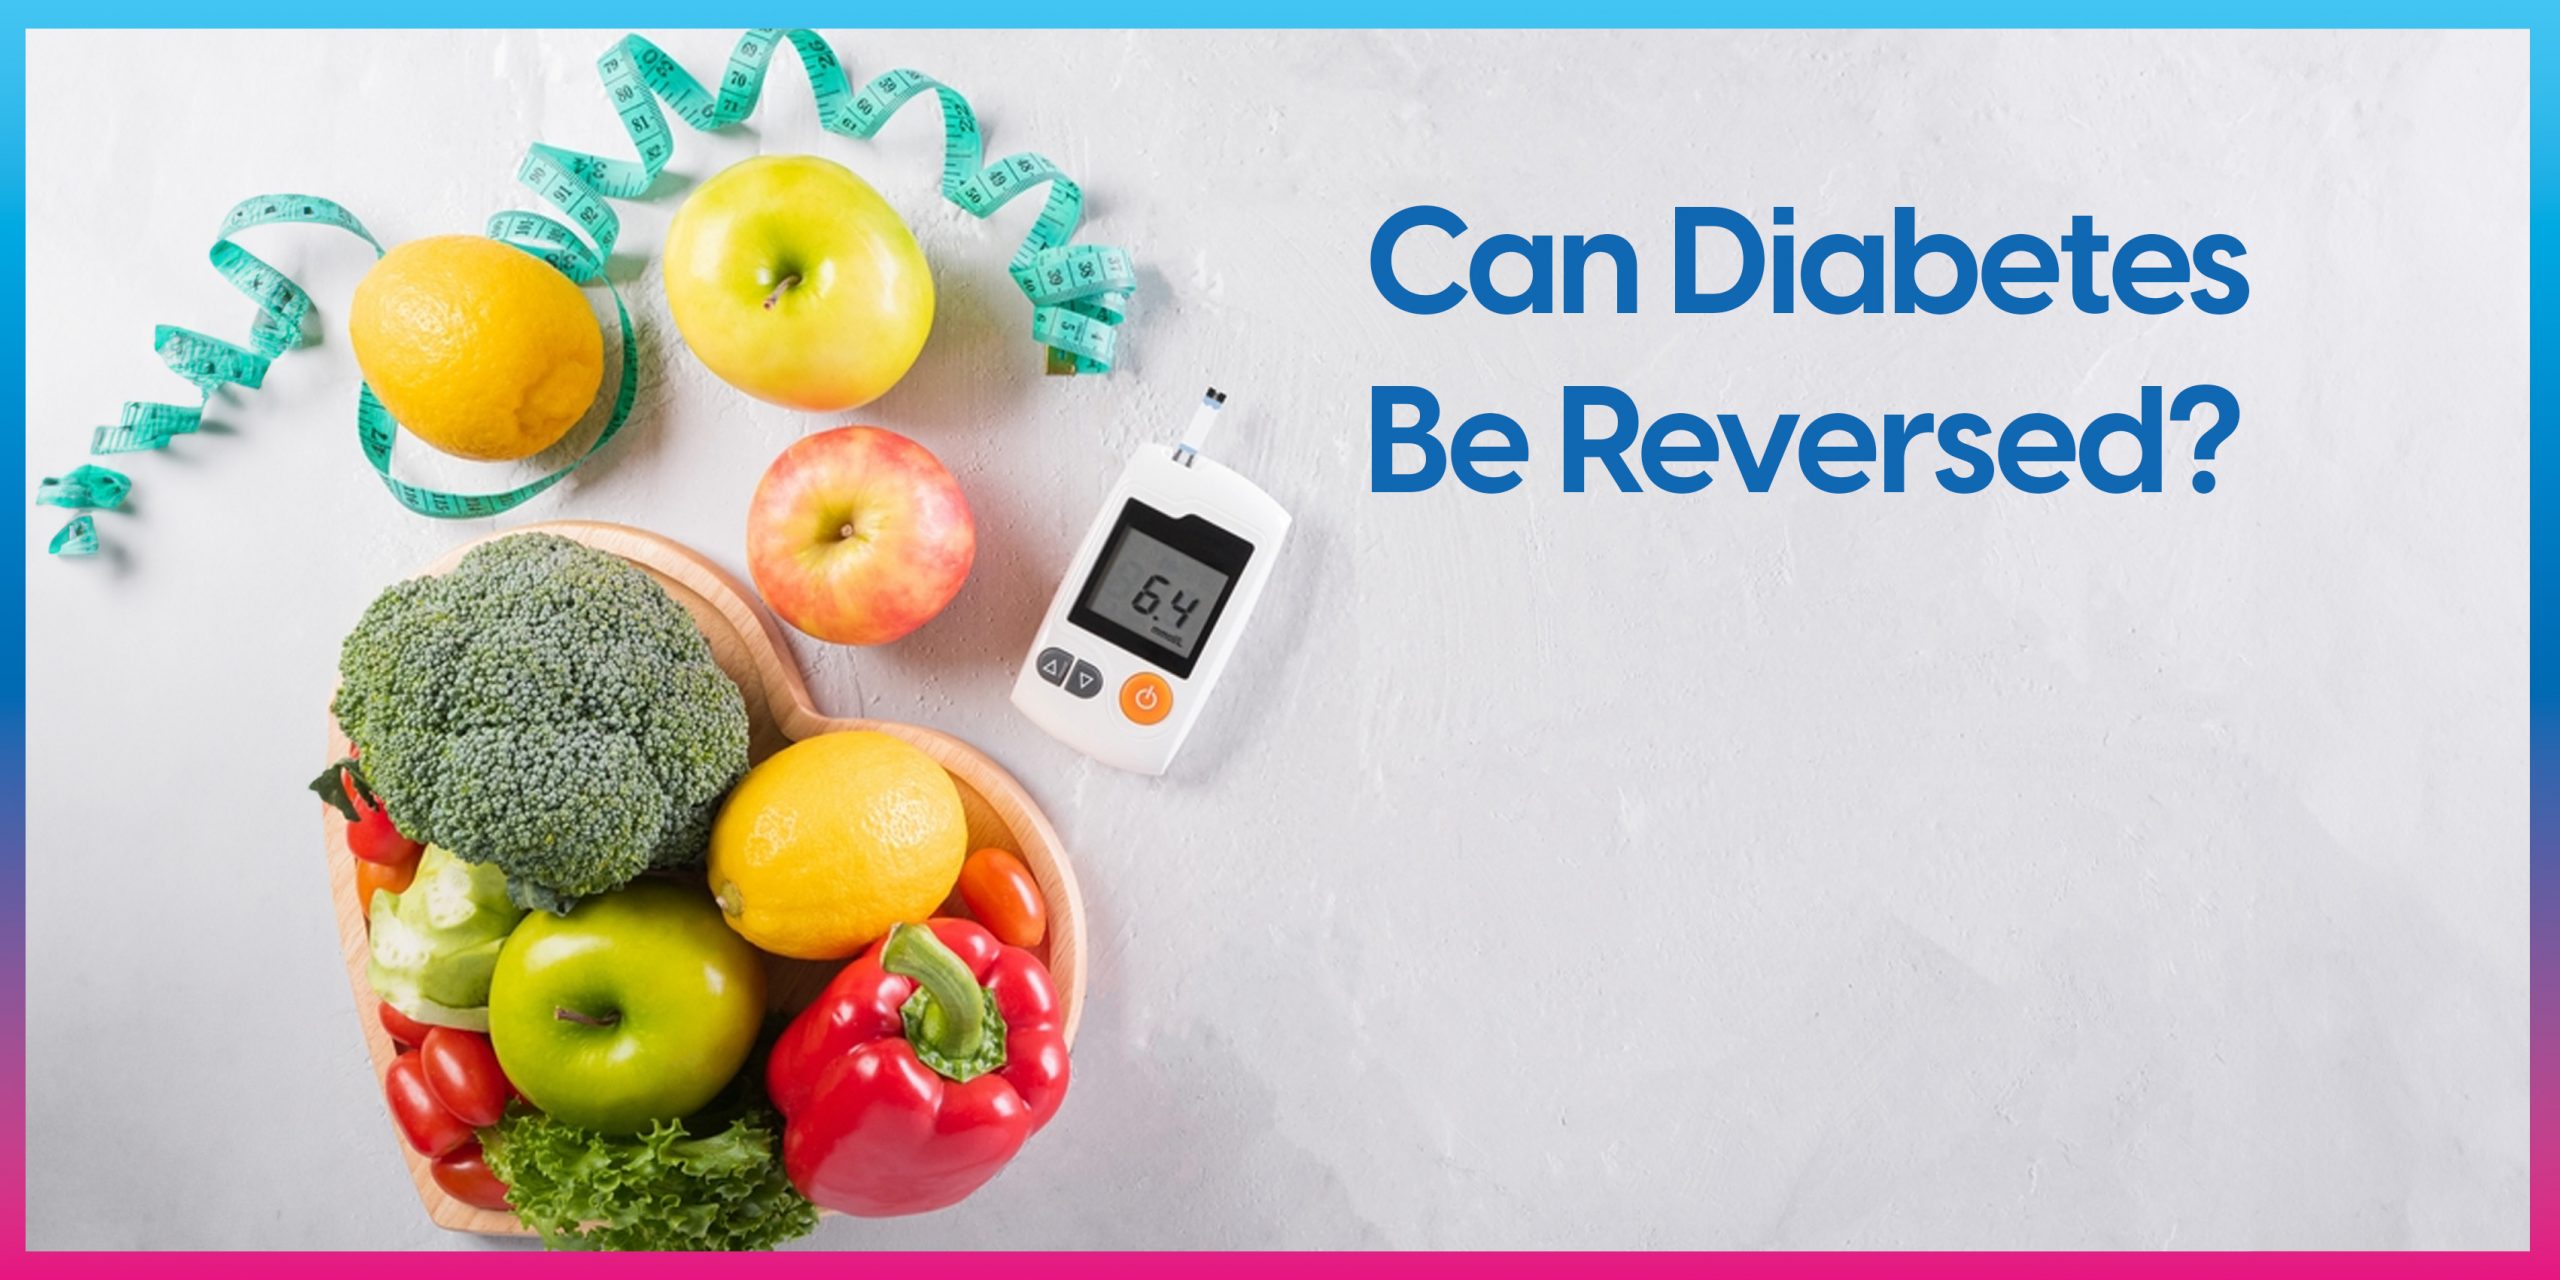 Can diabetes be reversed?